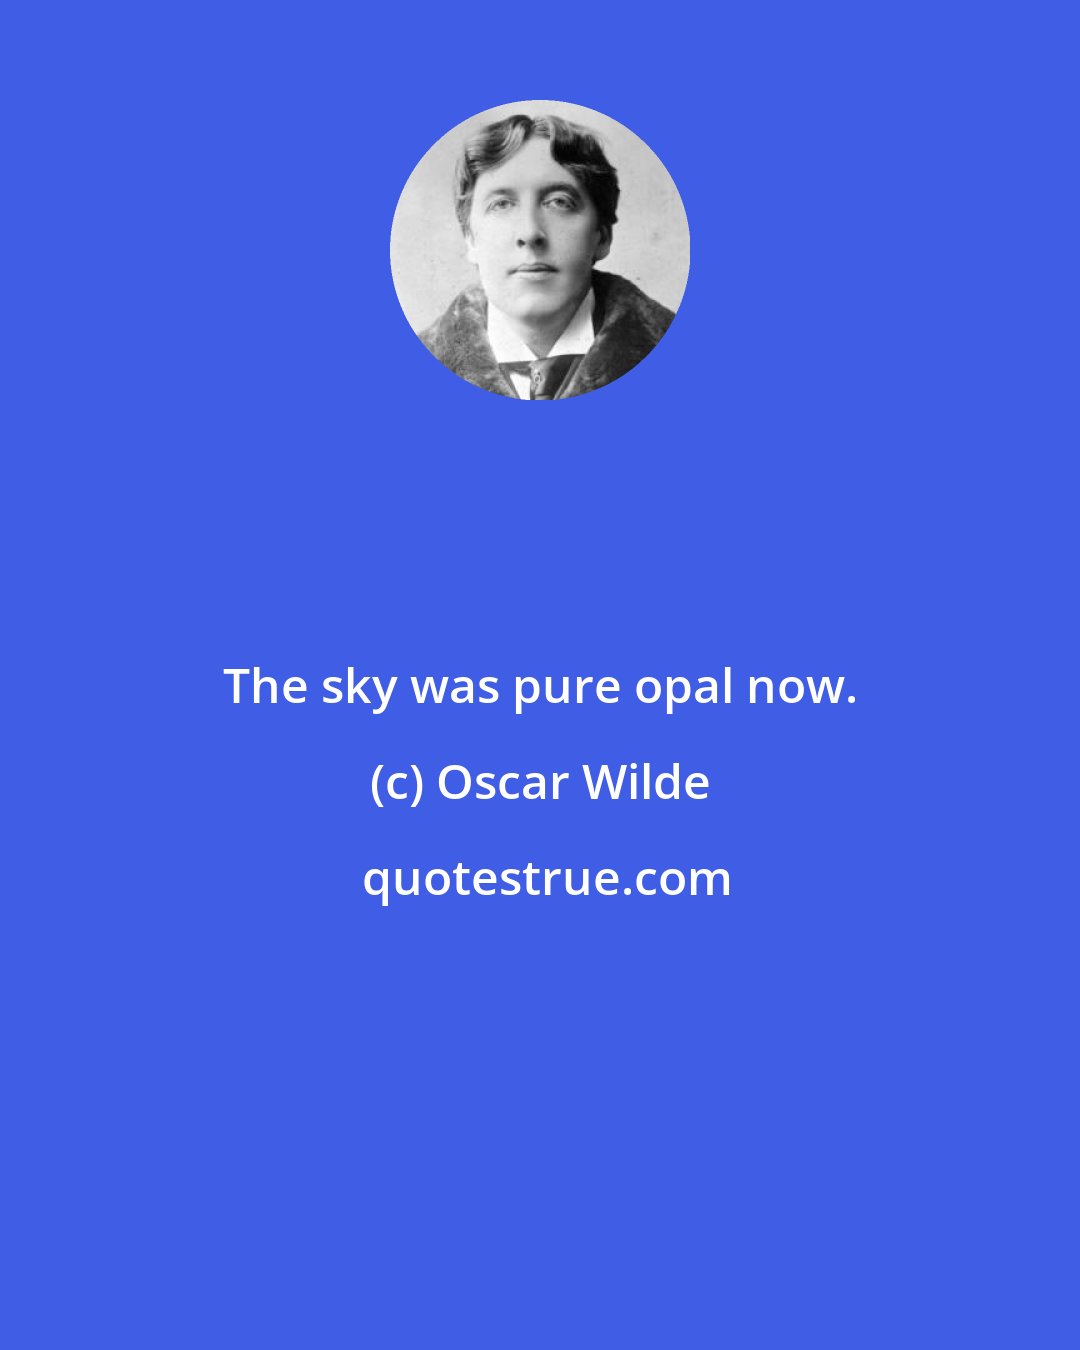 Oscar Wilde: The sky was pure opal now.